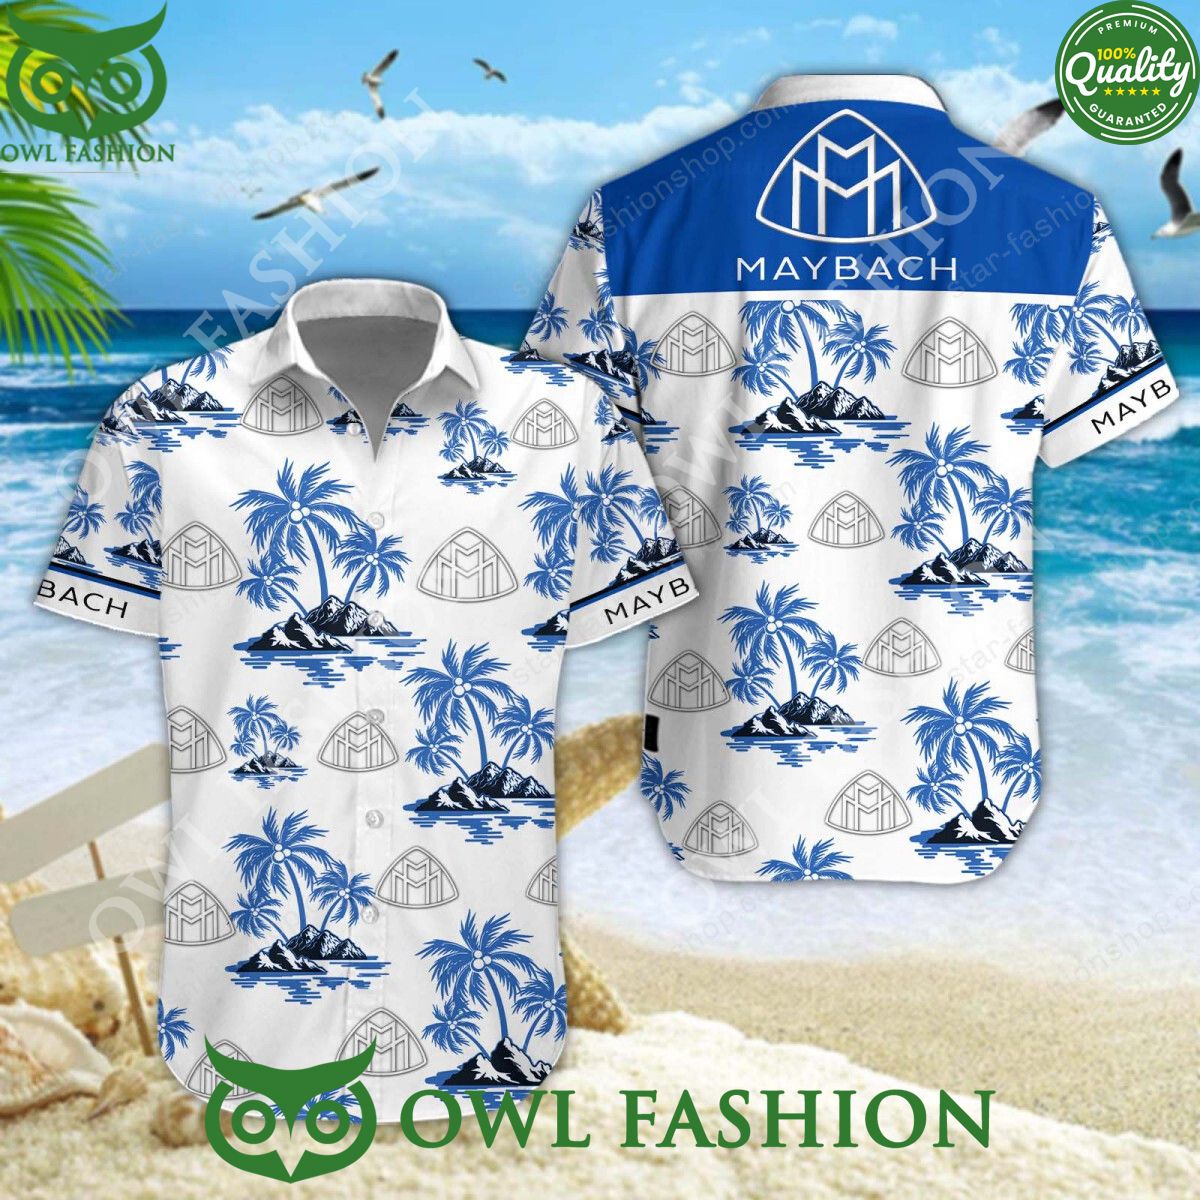 Maybach Luxury Motor Brand Hawaiian Shirt and Shorts